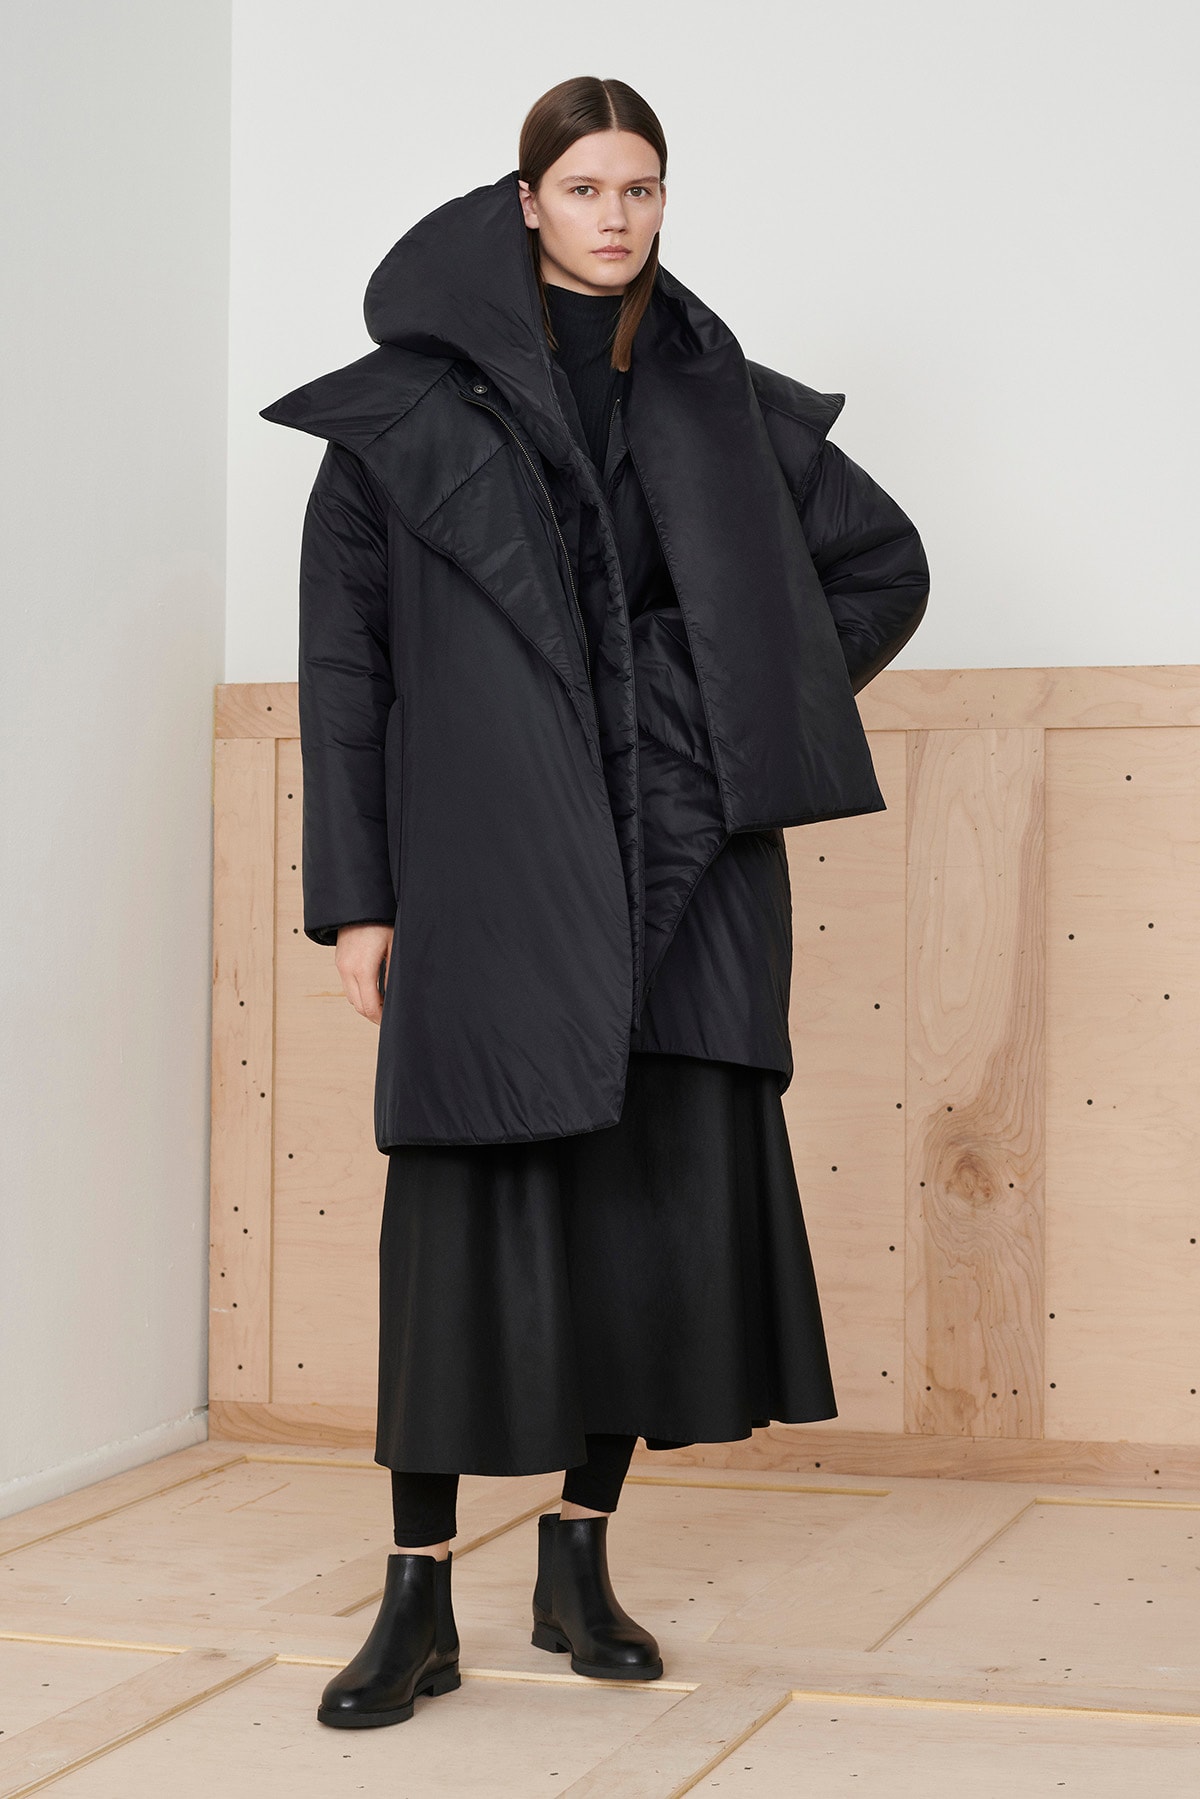 Eileen Fisher x Nordstrom Olivia Kim Sustainable Collection Nylon Coat Circle Skirt Black